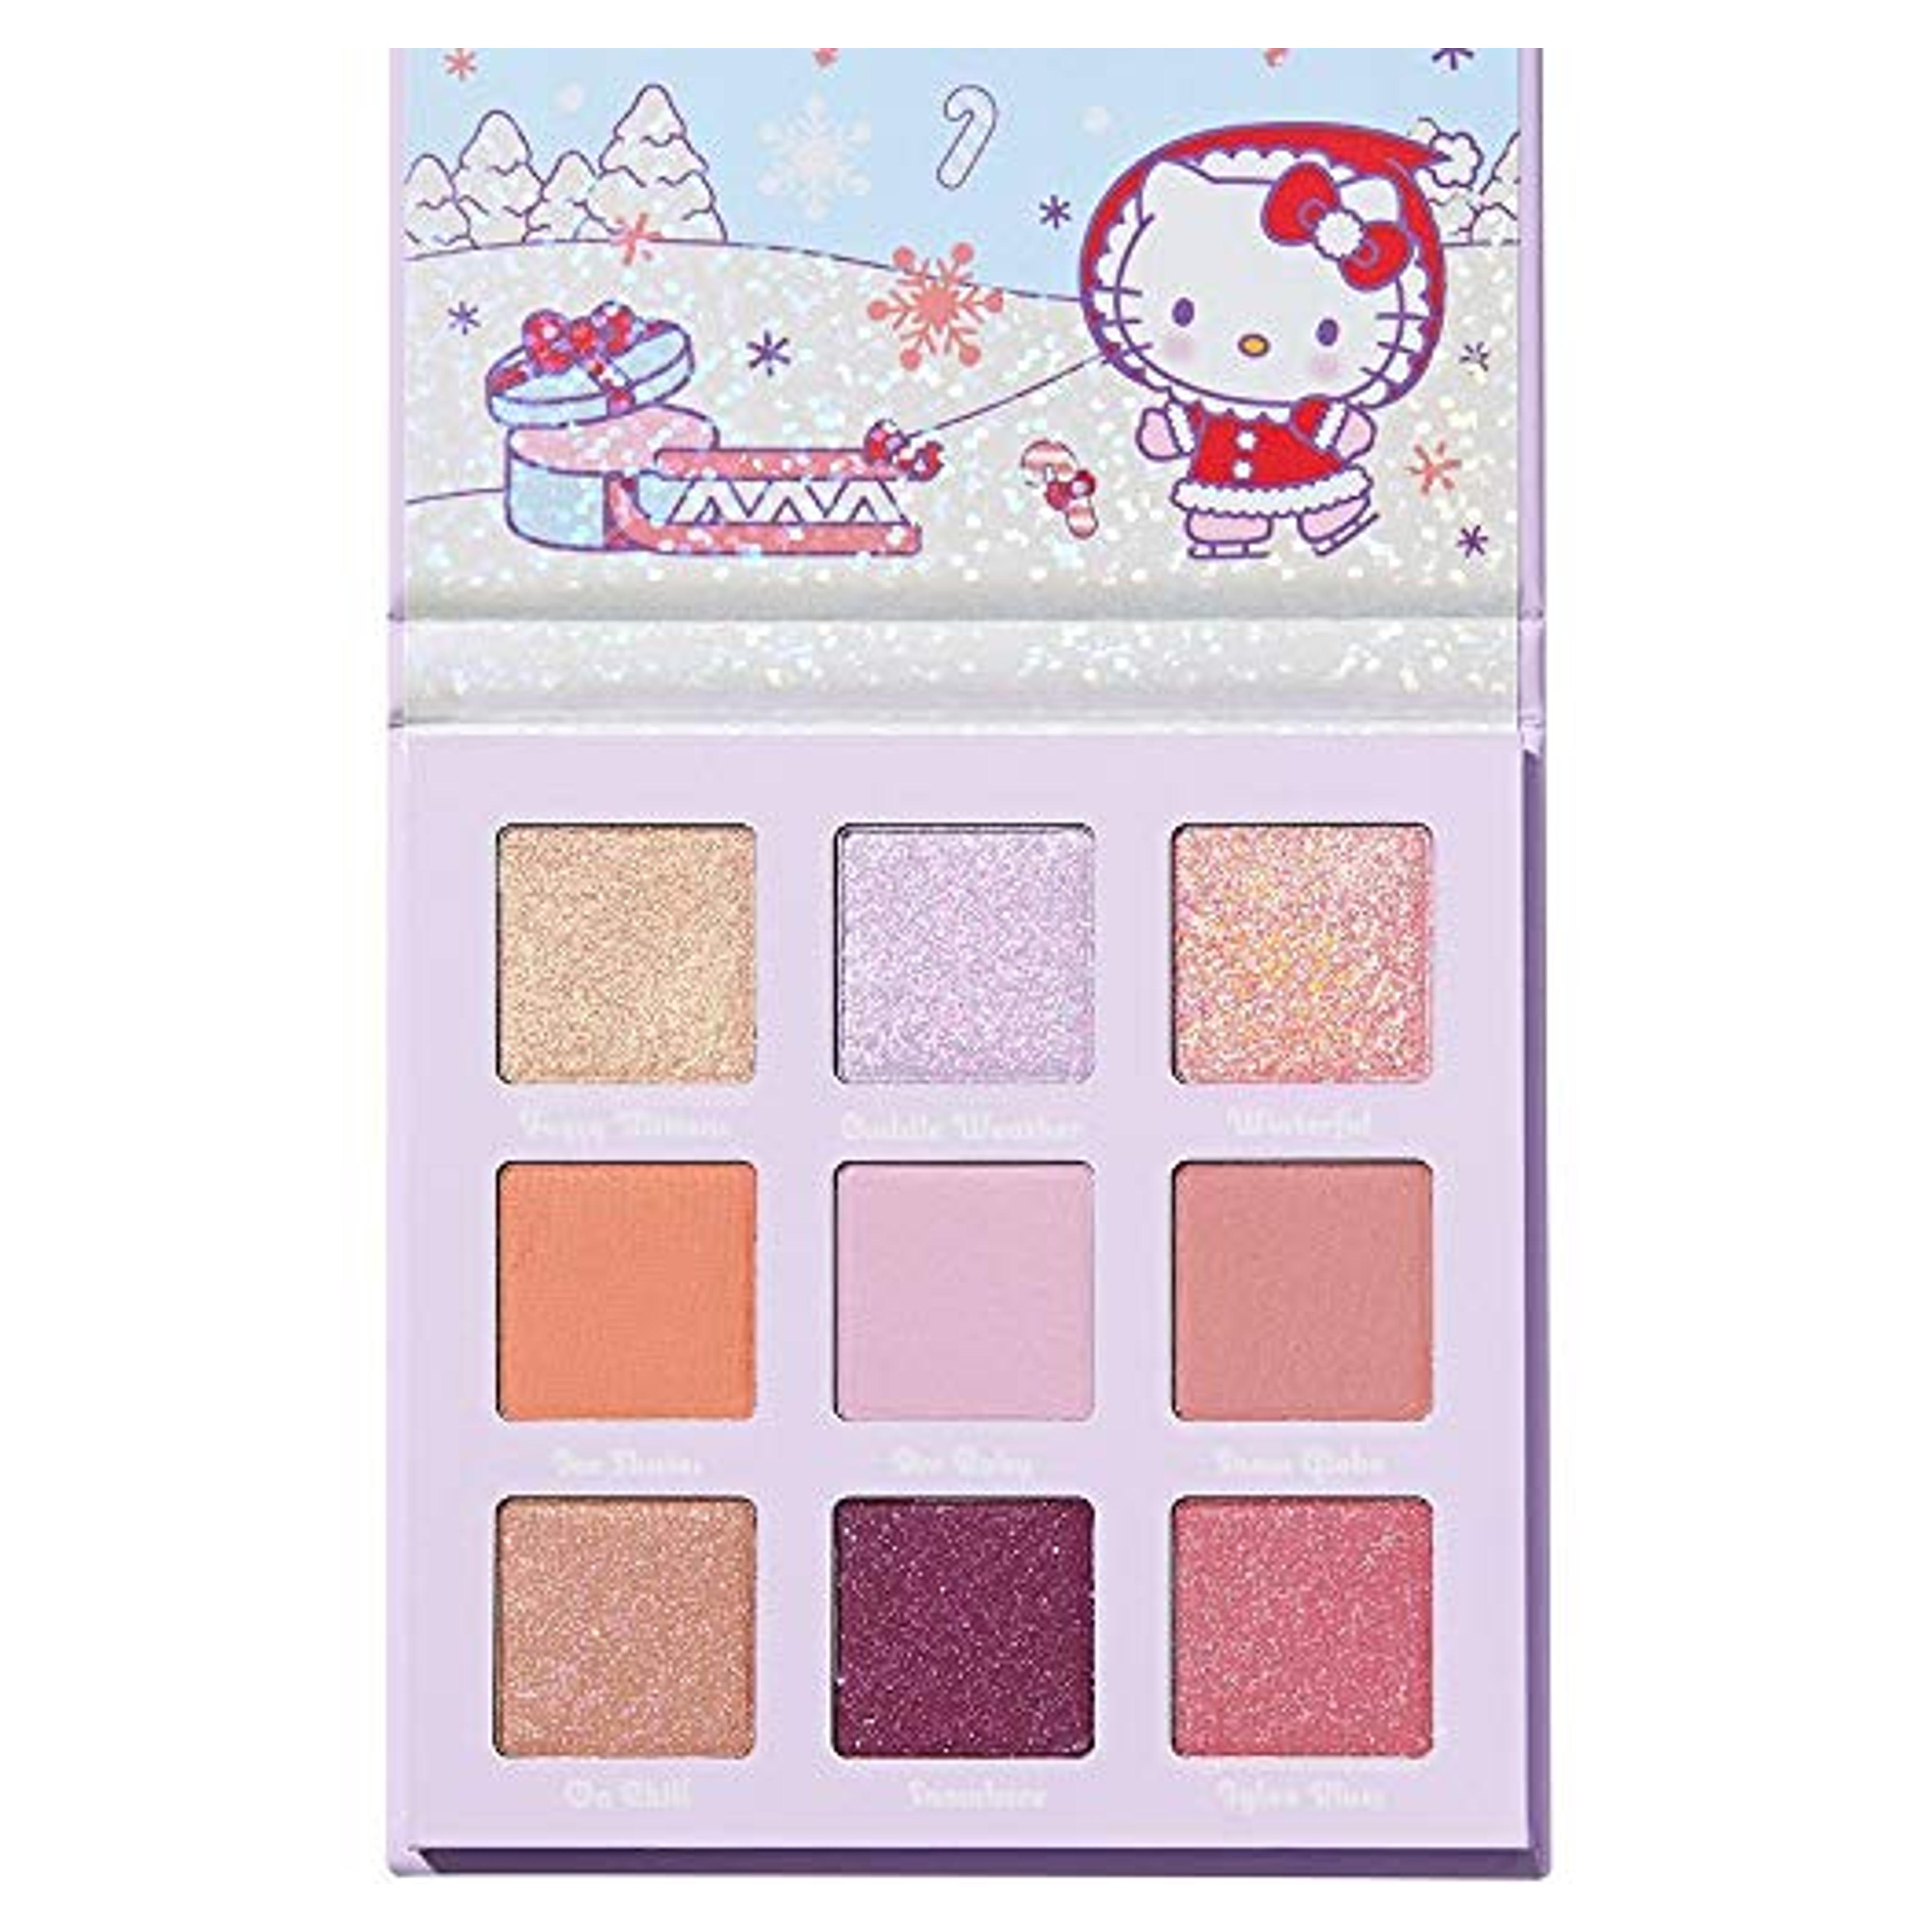 ColourPop x Hello Kitty Snow Much Fun Eyeshadow Palette! Full Size New in Box :)